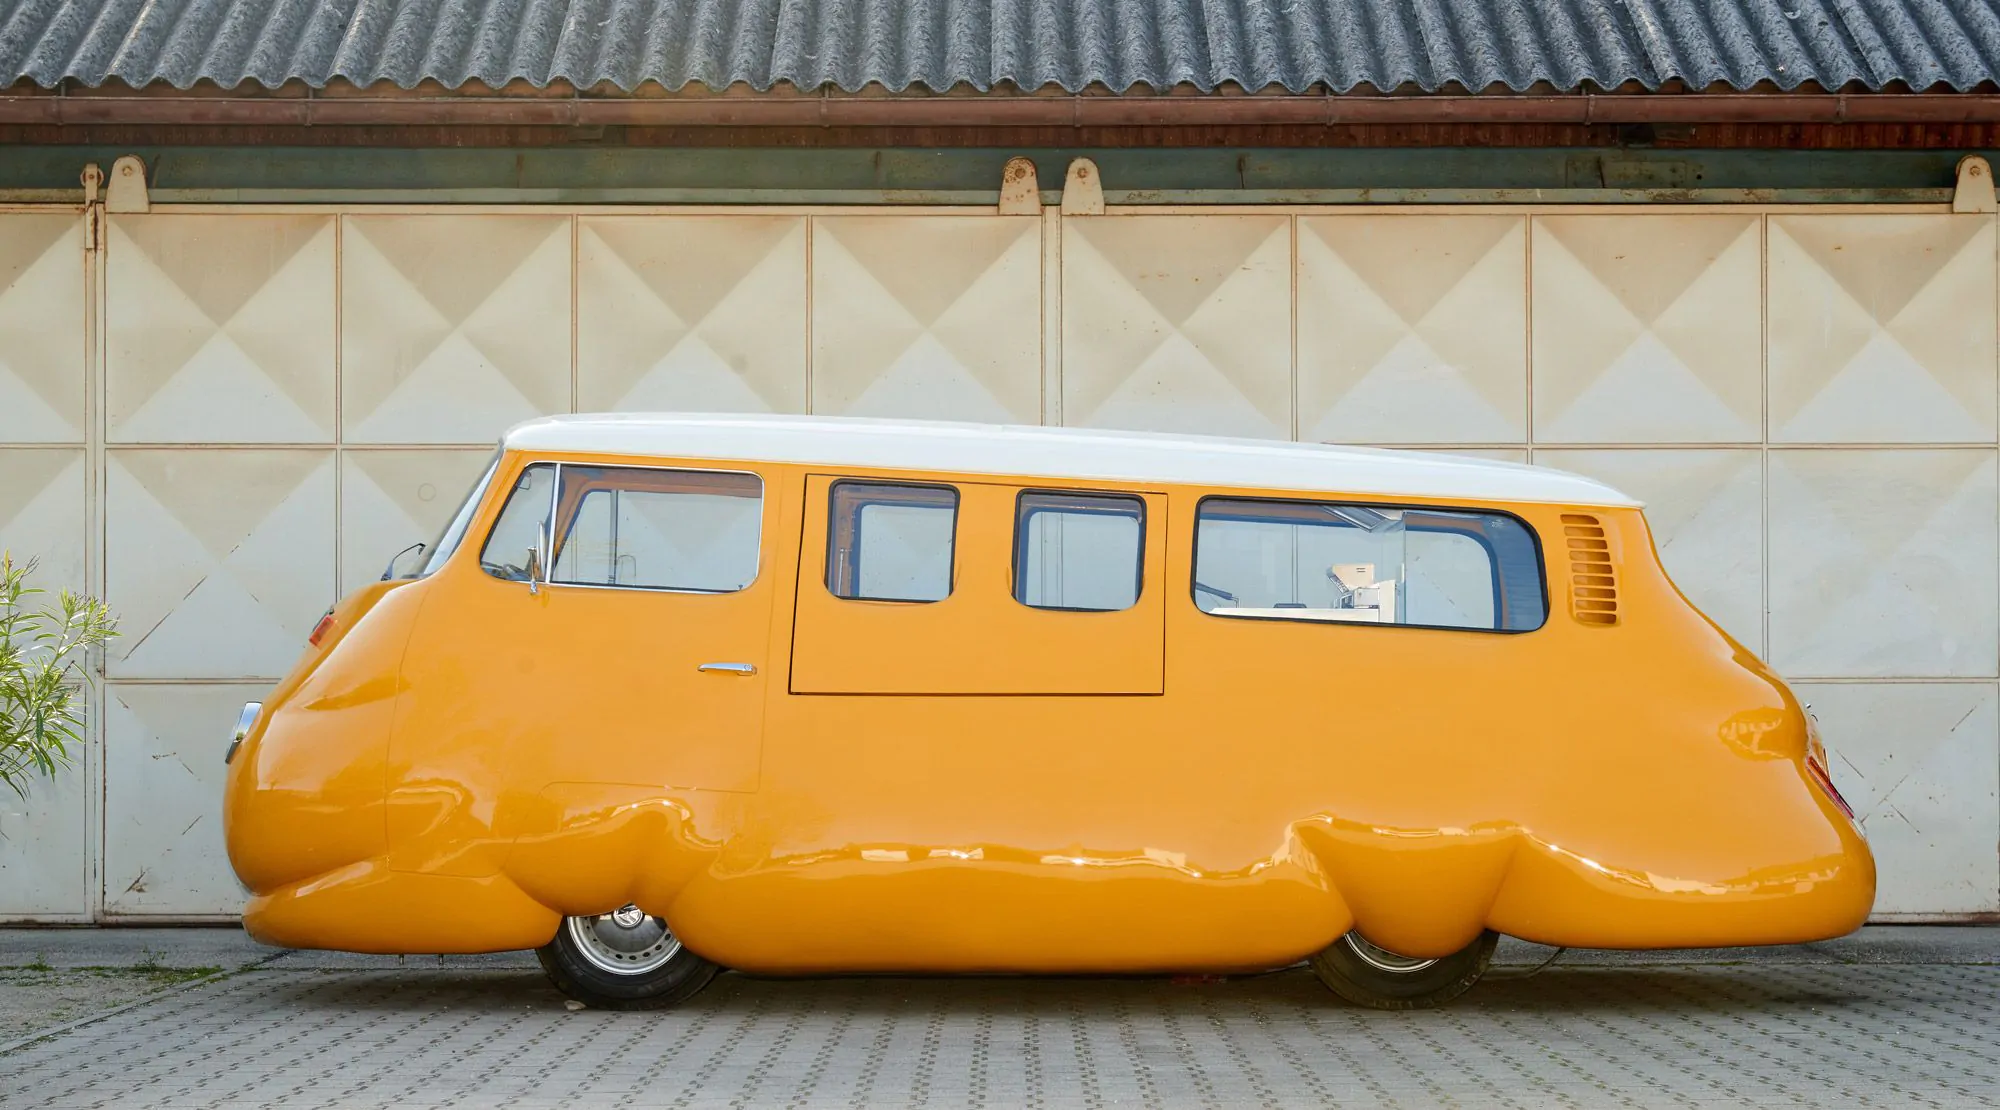 Hot Dog Bus by Erwin Wurm